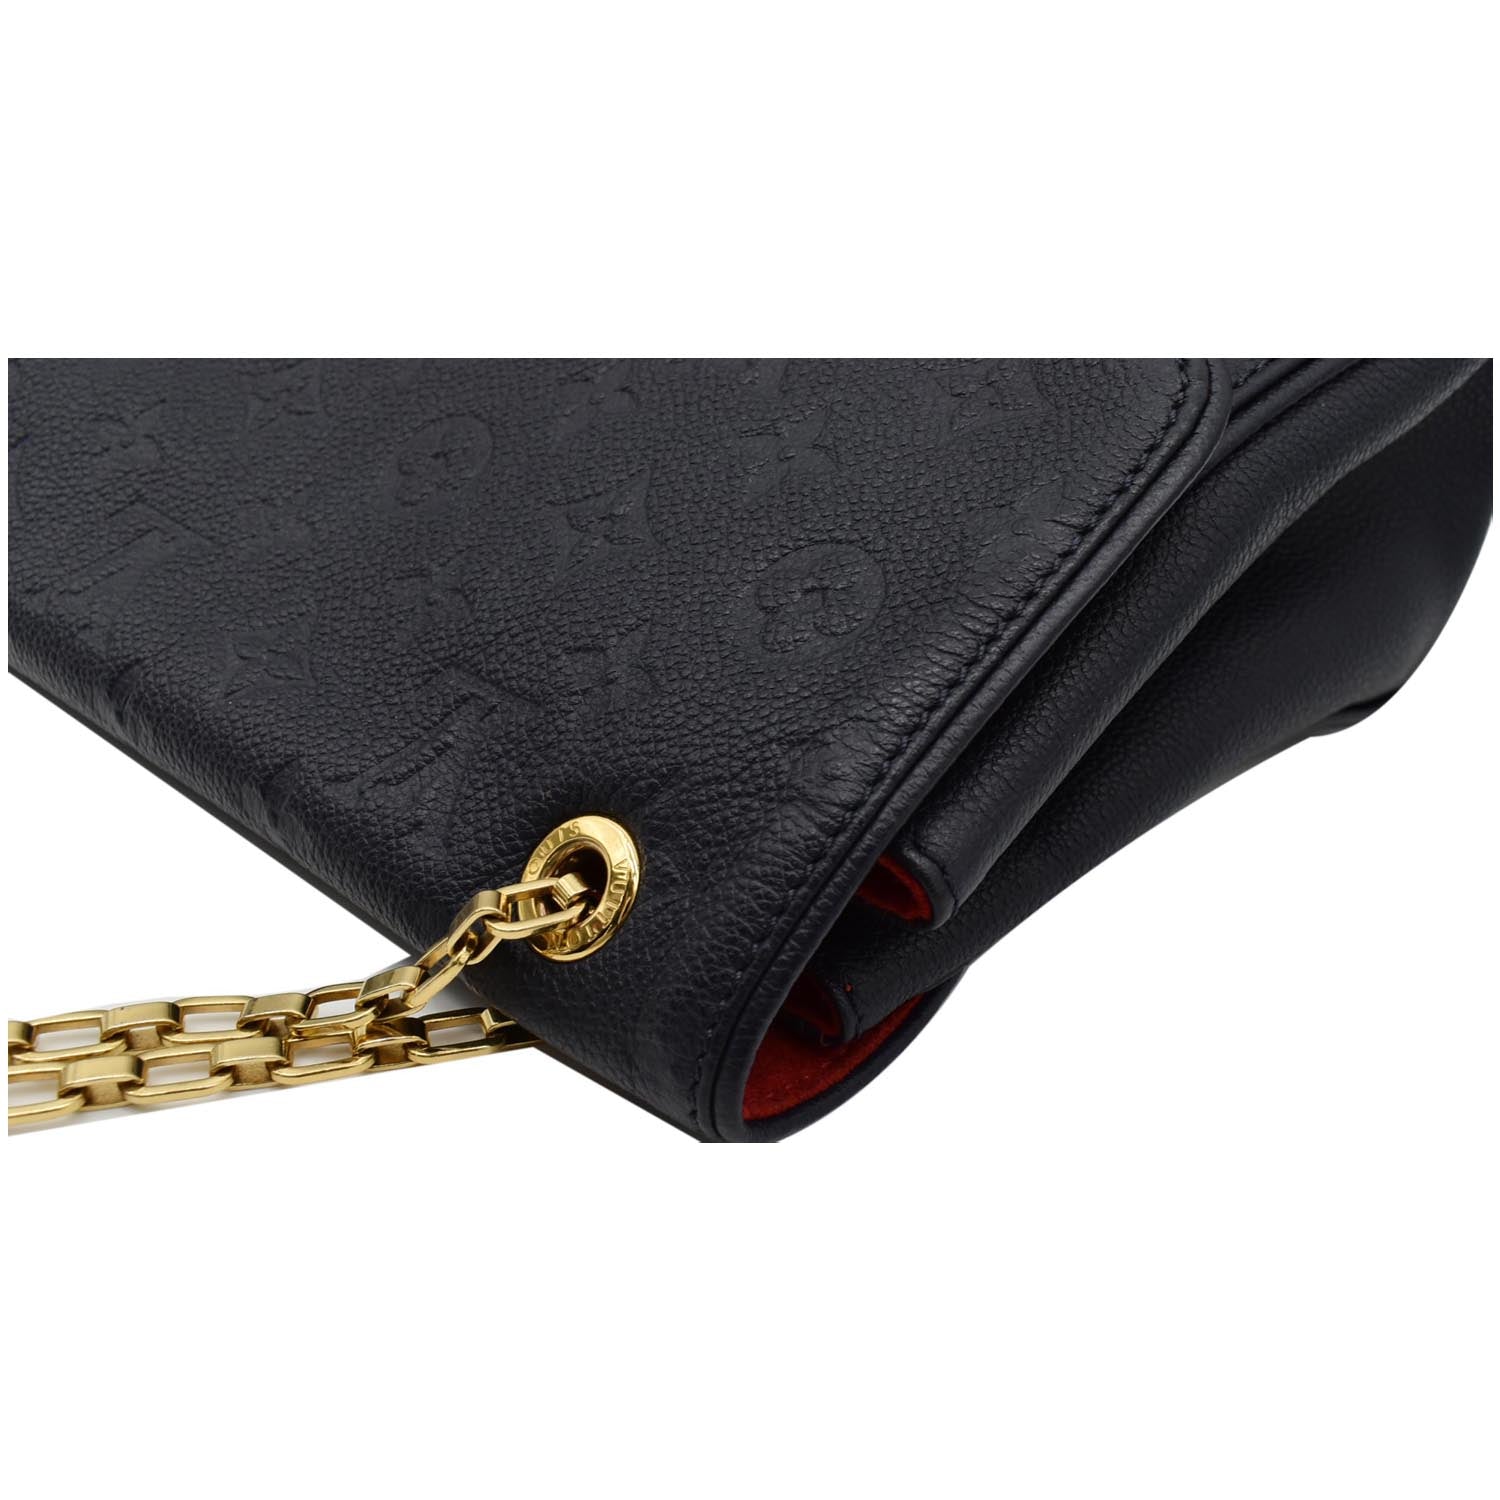 Saint-germain leather mini bag Louis Vuitton Burgundy in Leather - 20208326